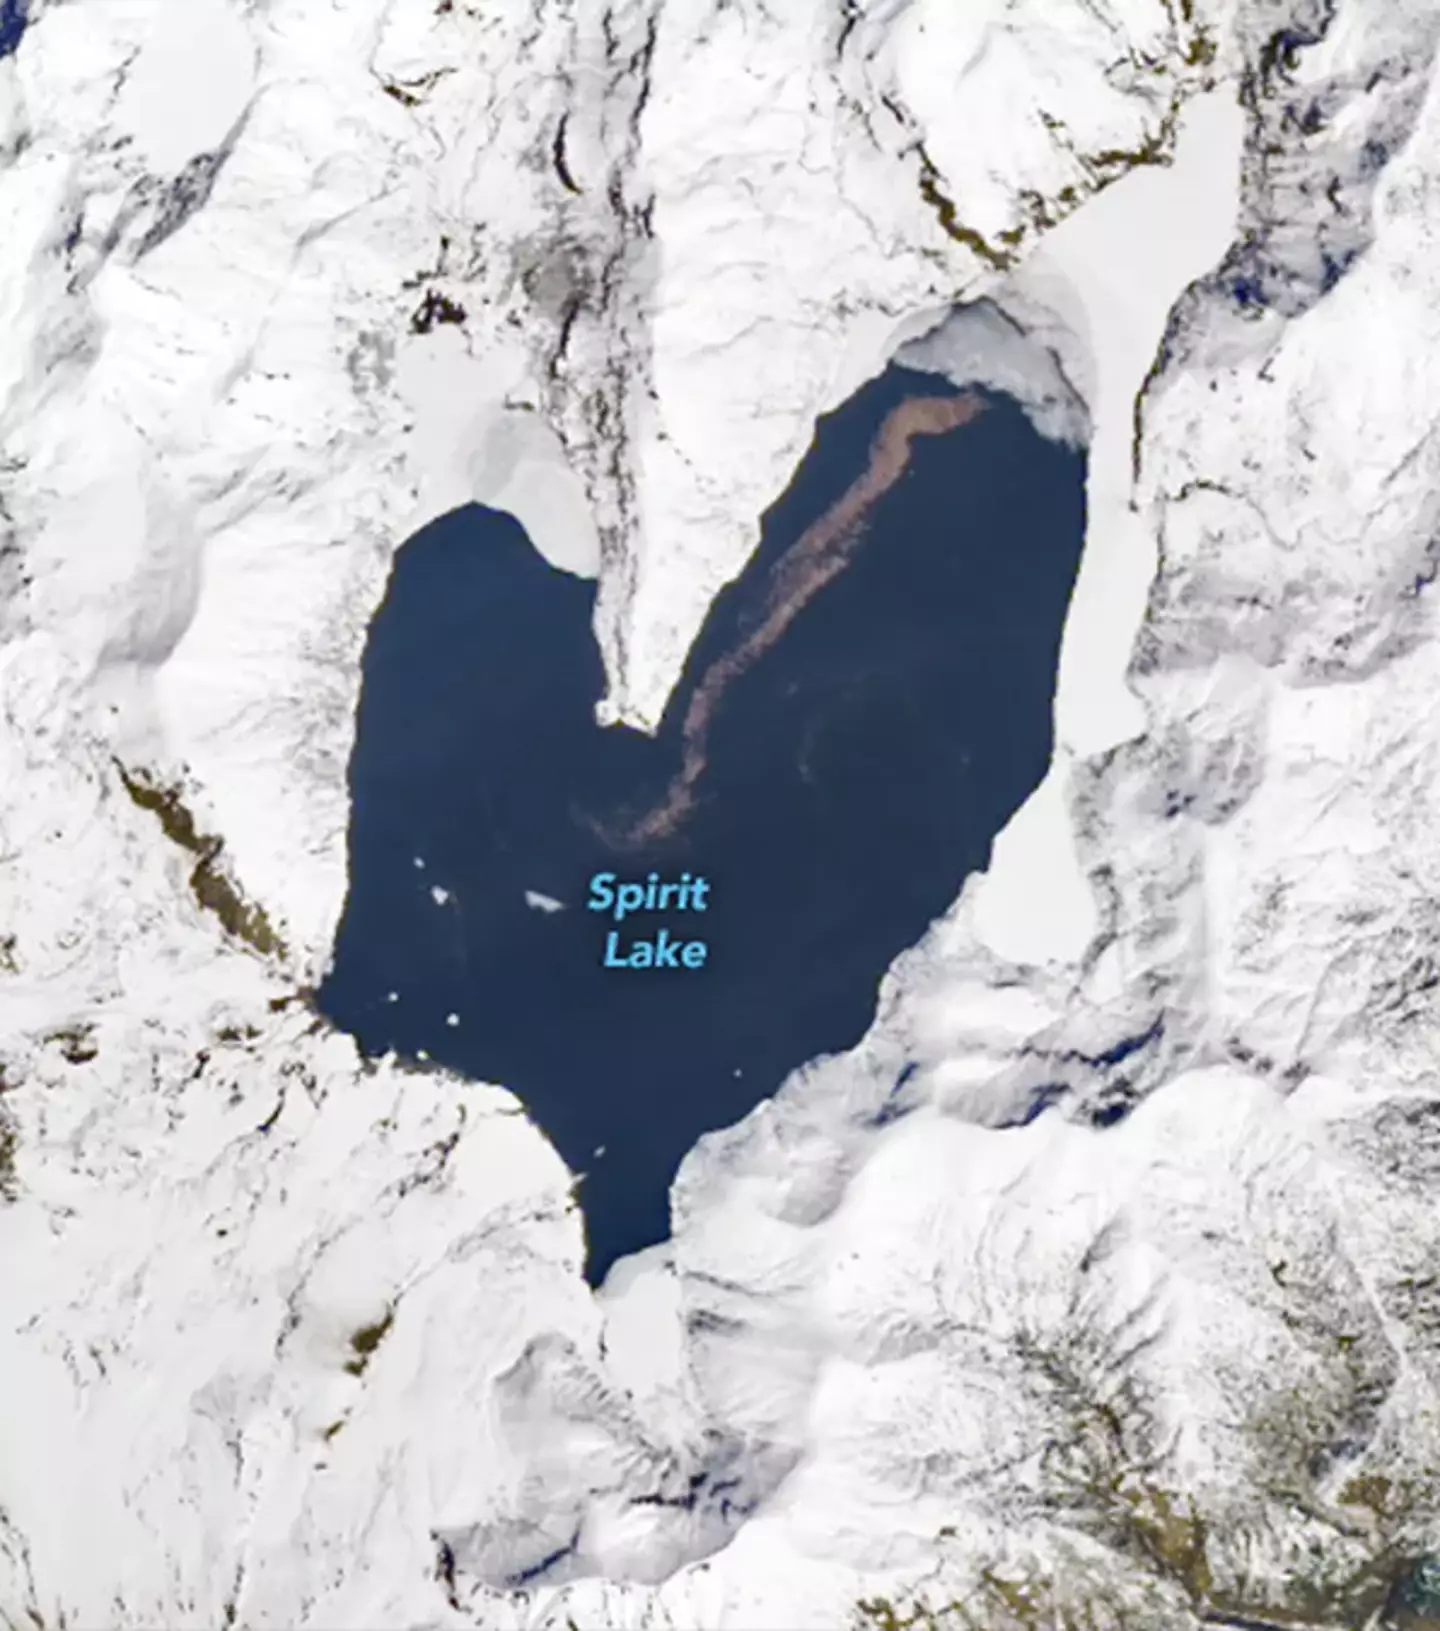 Heart-shaped lake in Washington has a dark history behind its formation / NASA Earth Observatory